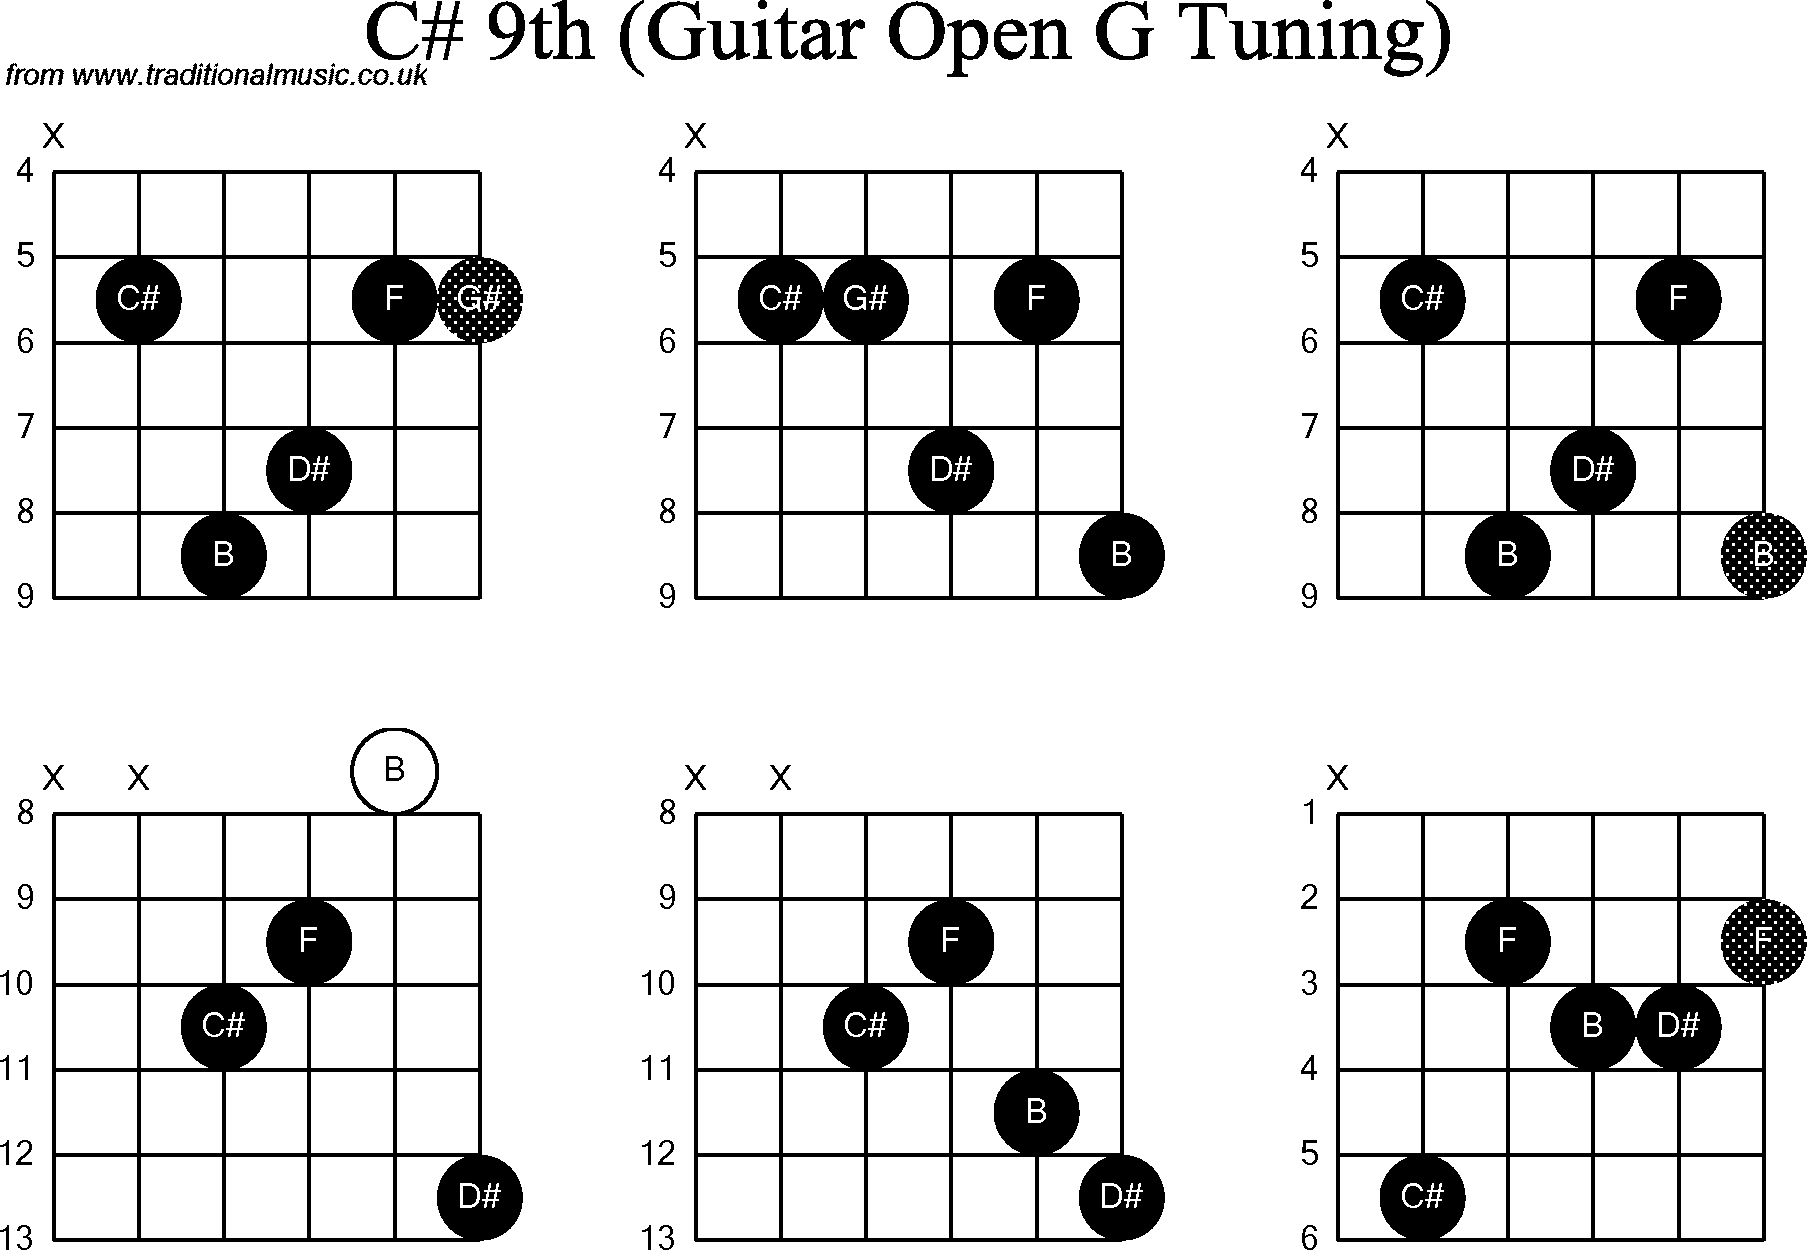 Chord diagrams for Dobro C#9th